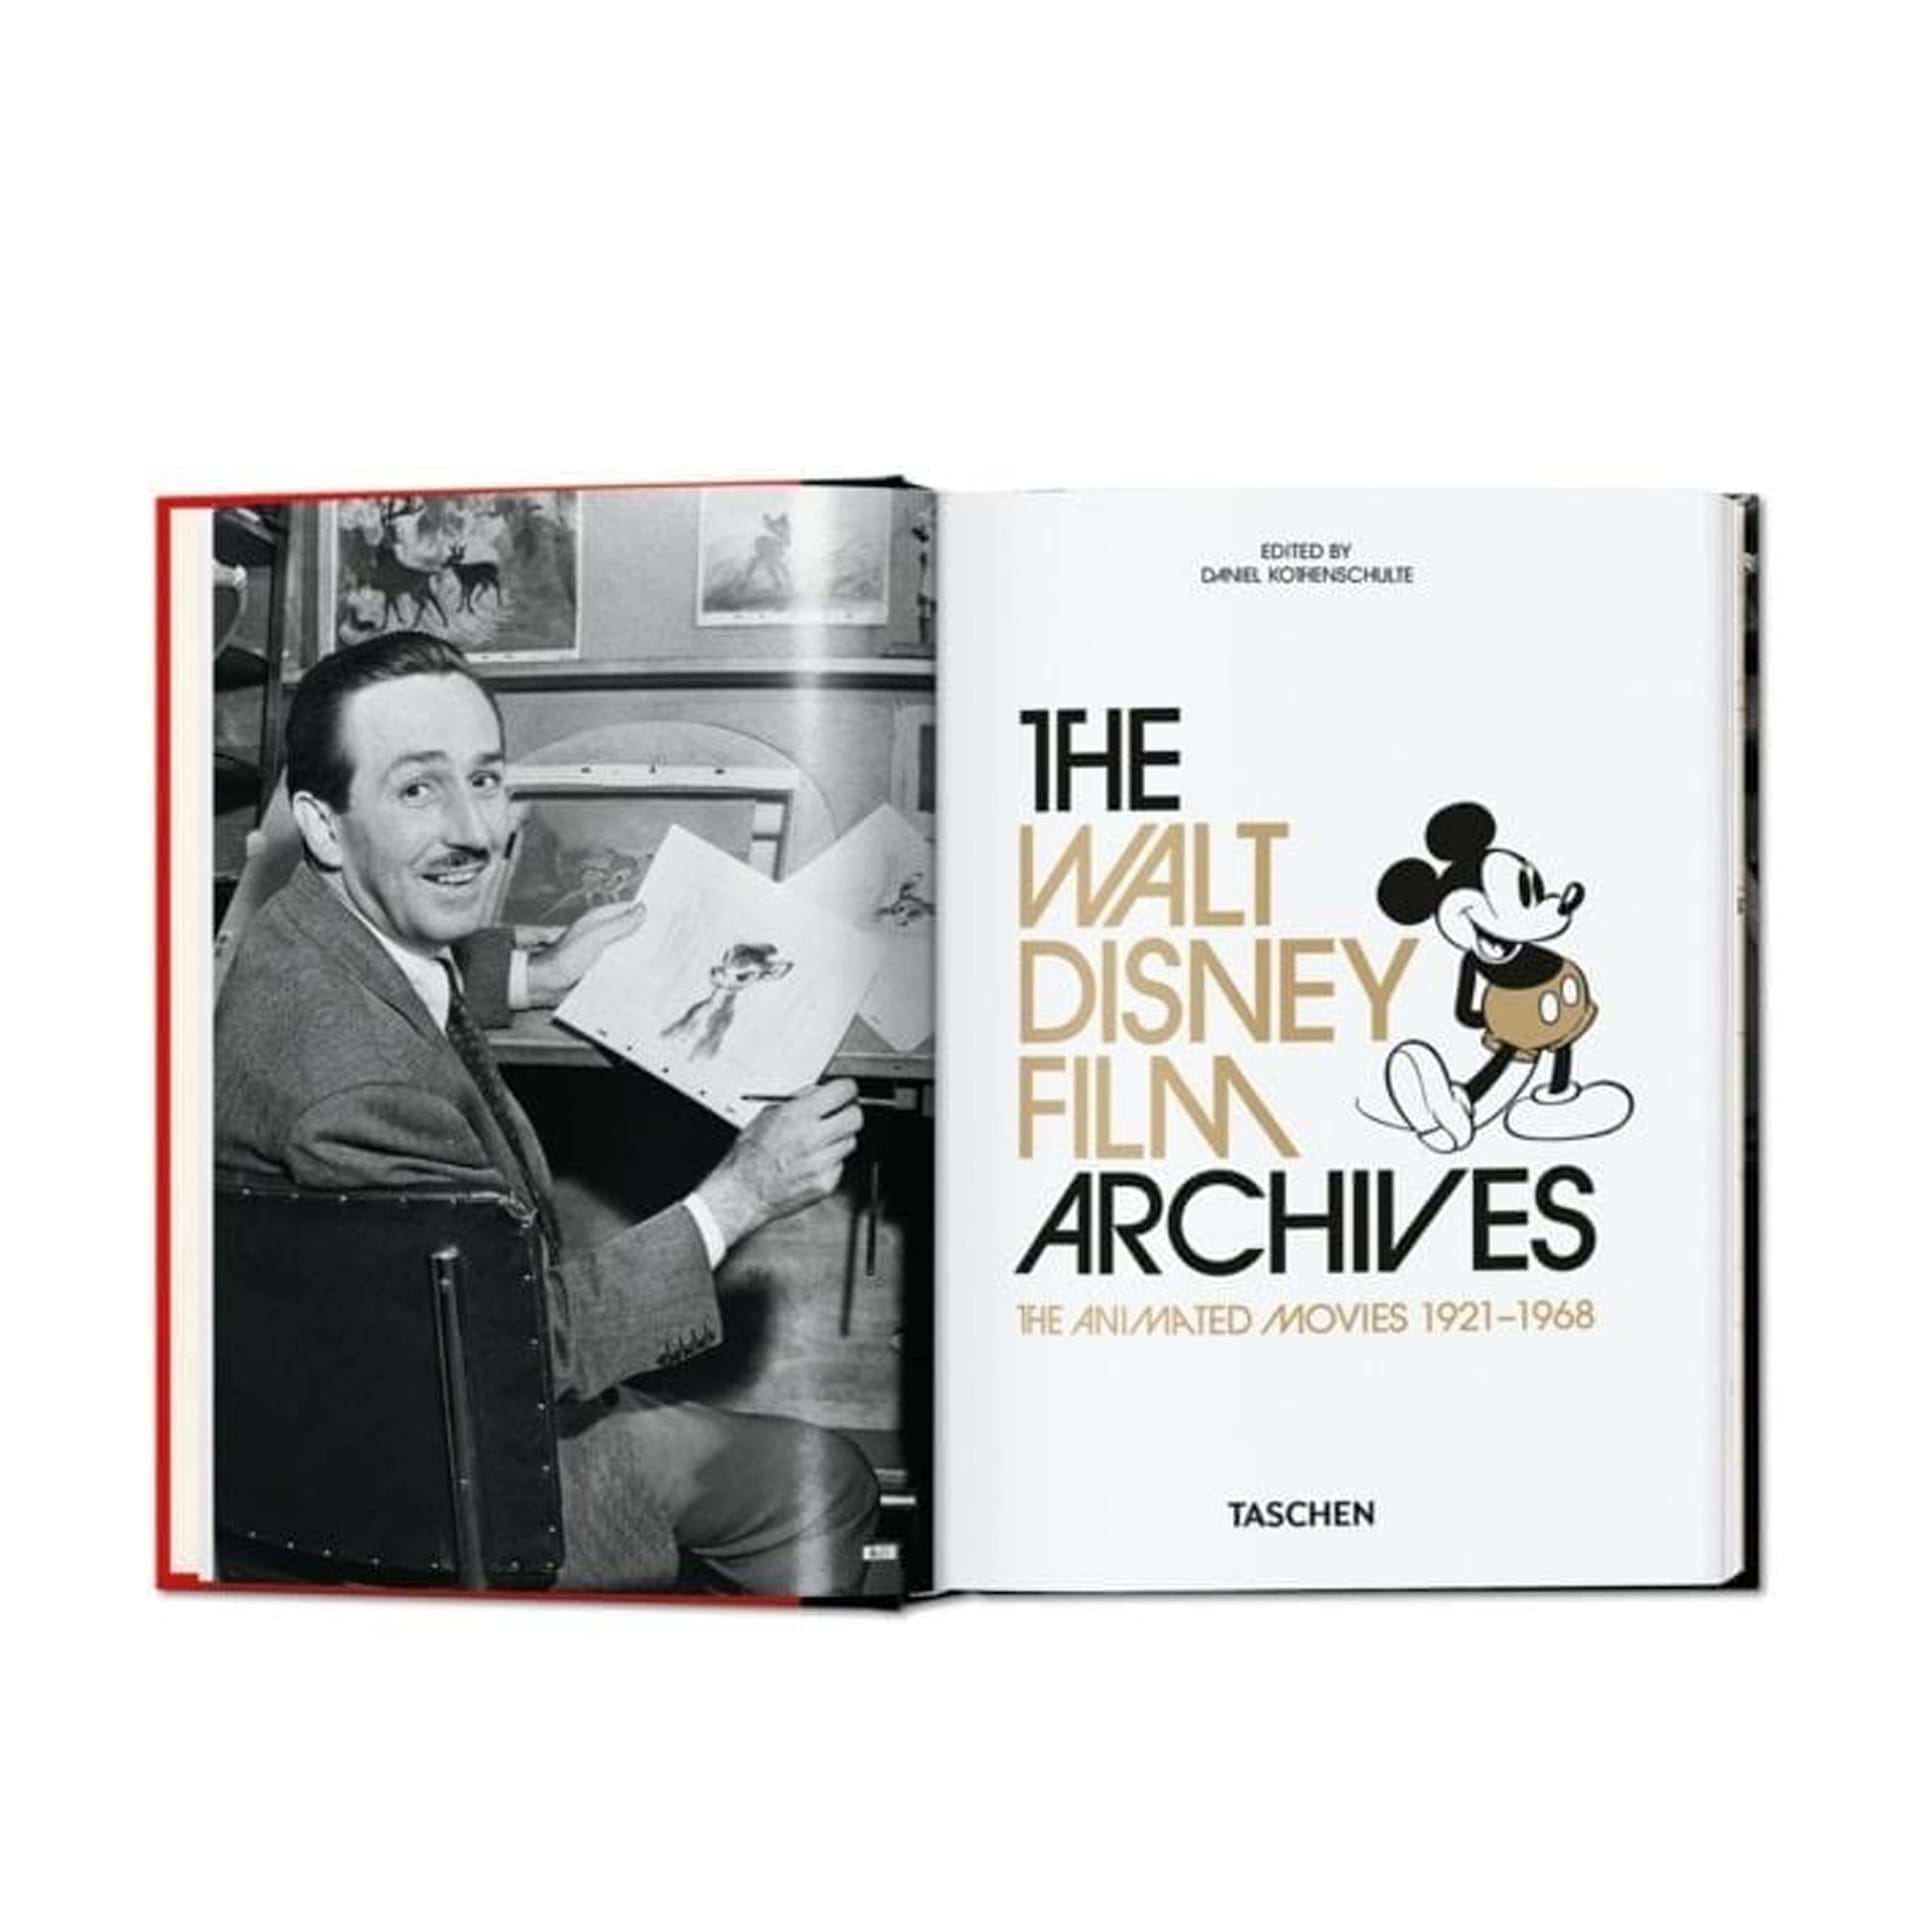 The Walt Disney Film Archives - 40 series - New Mags - NO GA